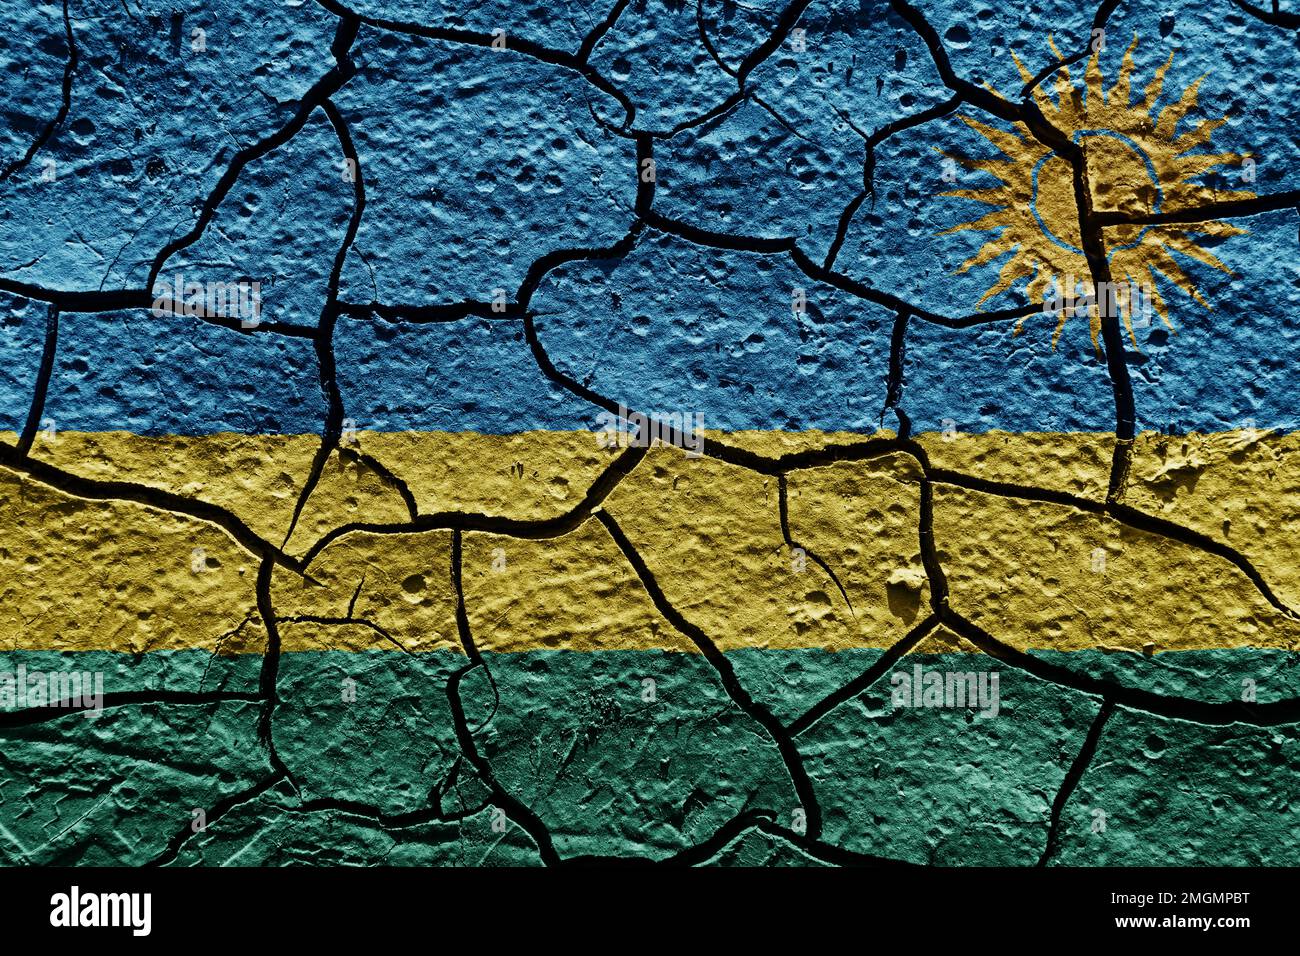 Rwanda flag on a mud texture of dry crack on the ground Stock Photo